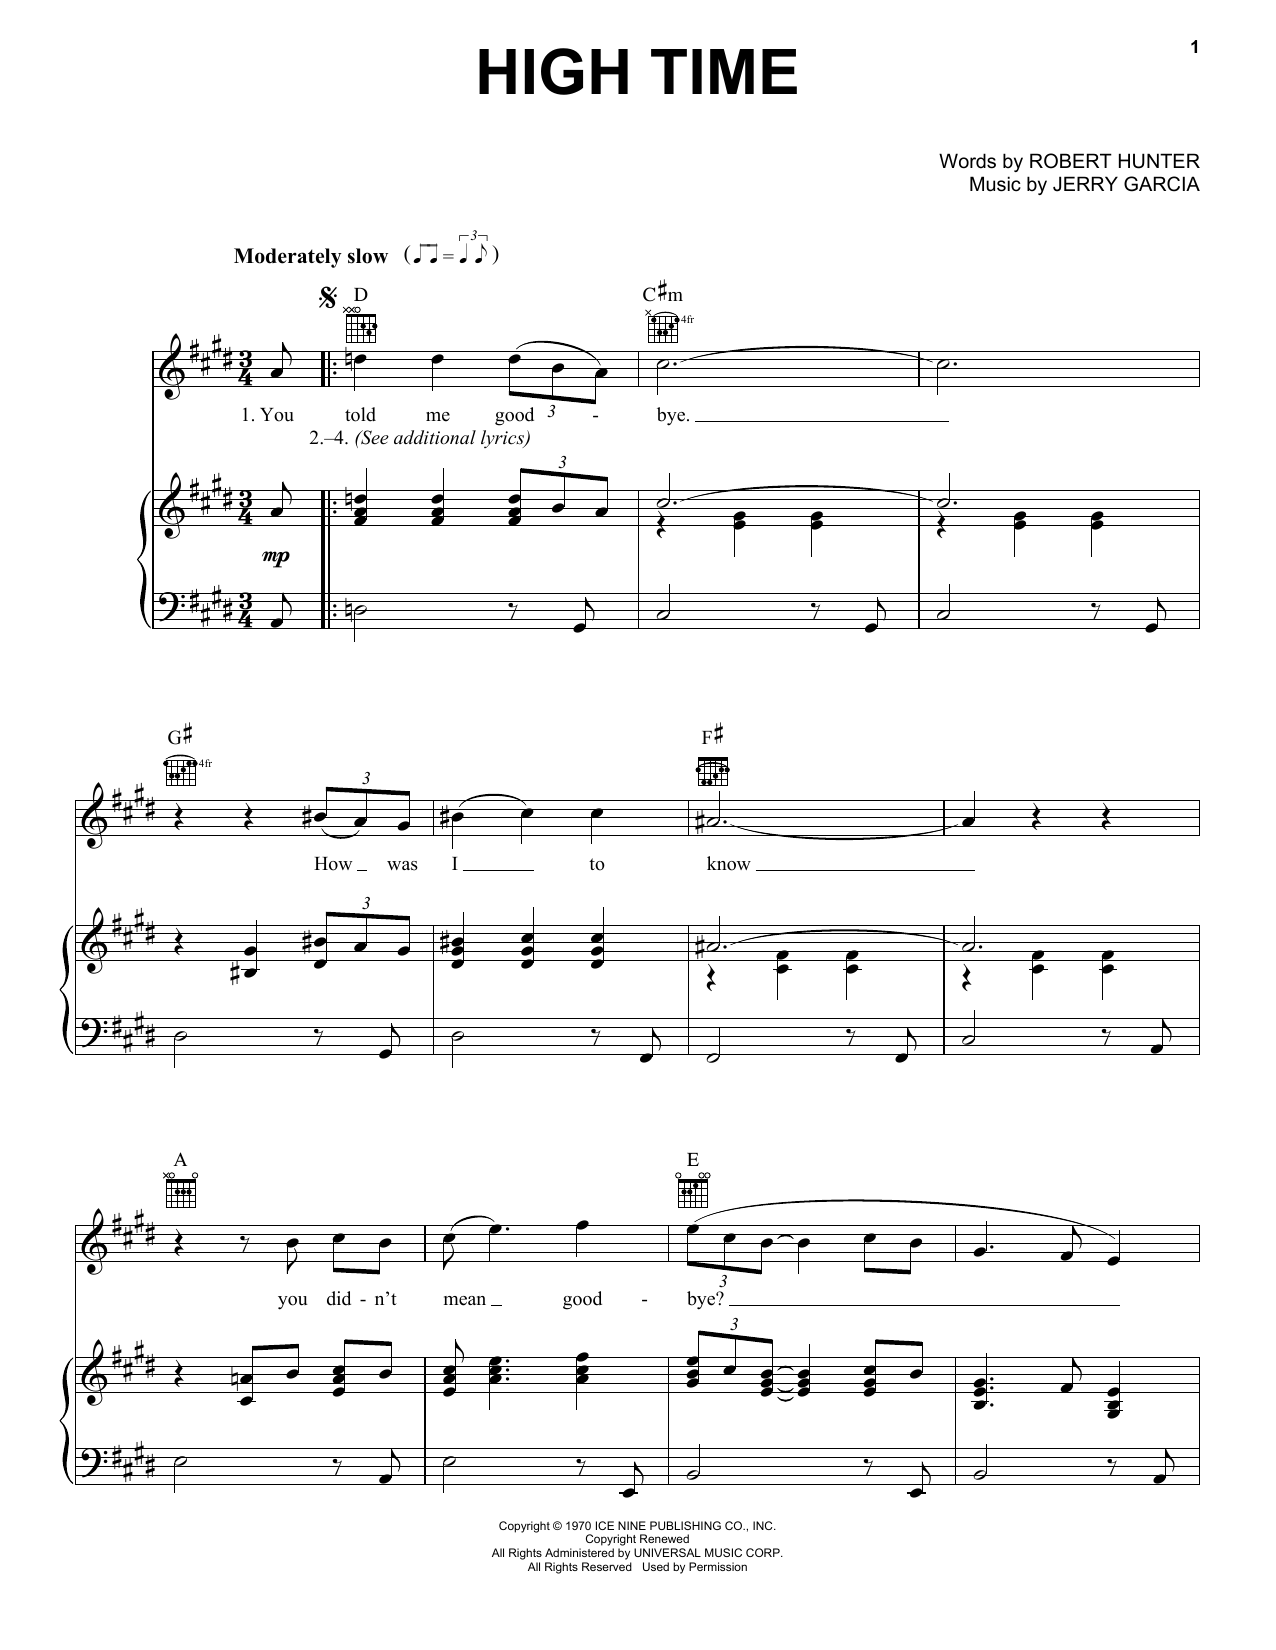 Grateful Dead High Time Sheet Music Notes & Chords for Lyrics & Chords - Download or Print PDF